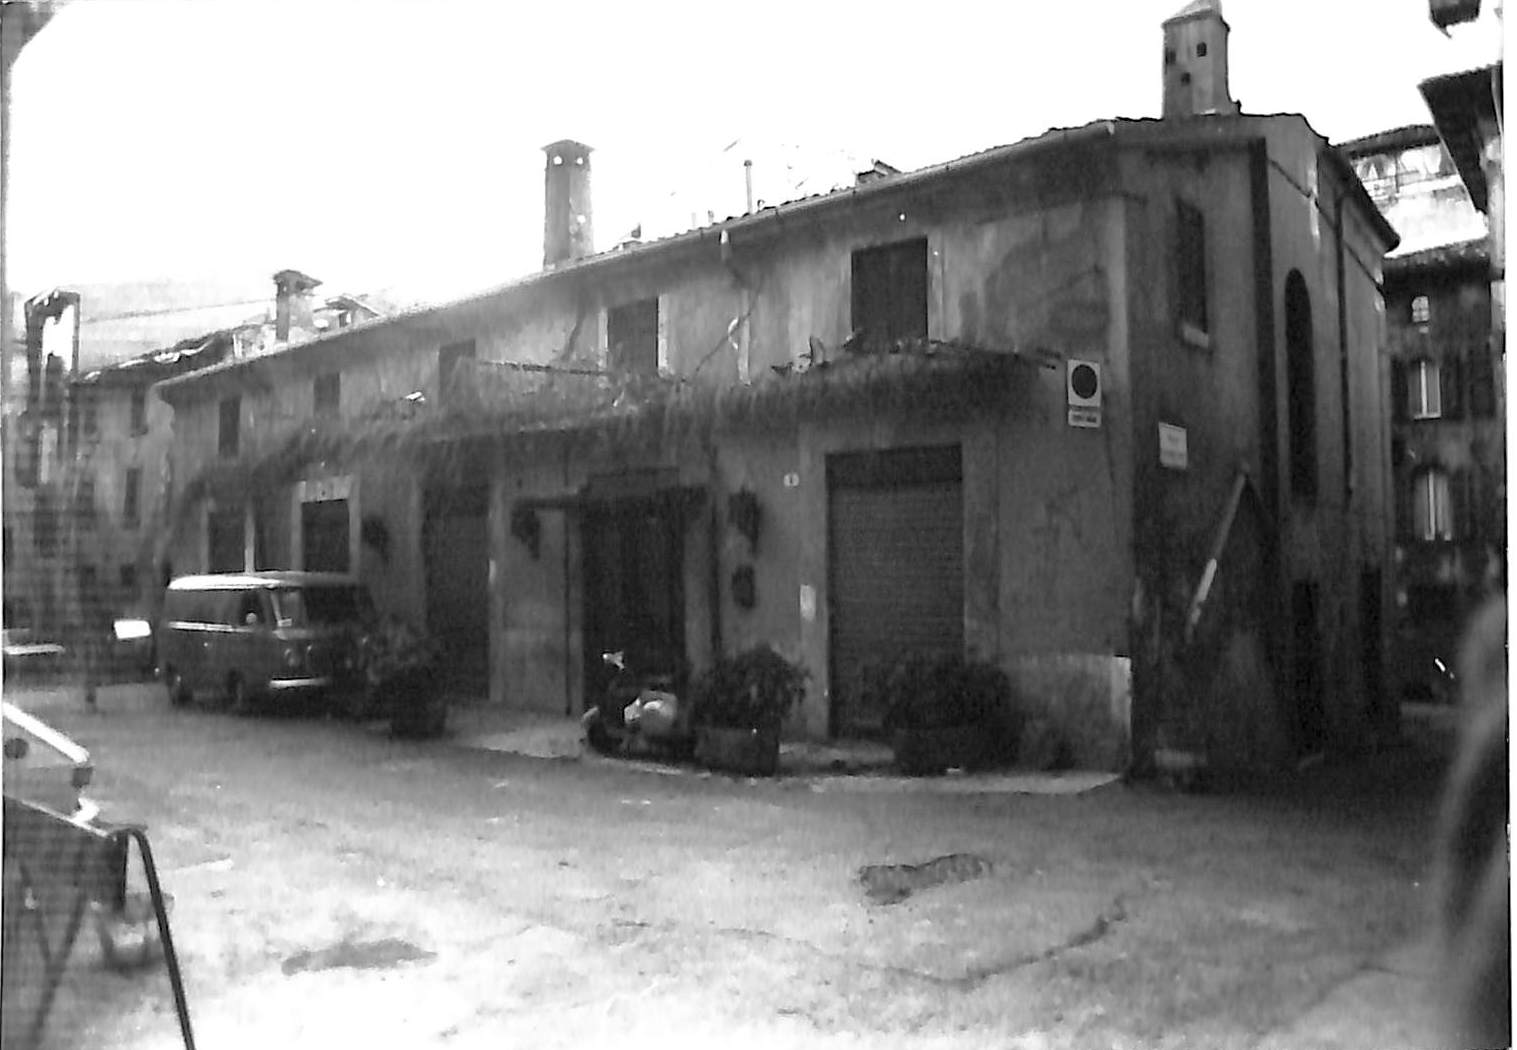 Casa/ ex Chiesa di S. Marco alle Carceri (casa) - Verona (VR)  (XII)